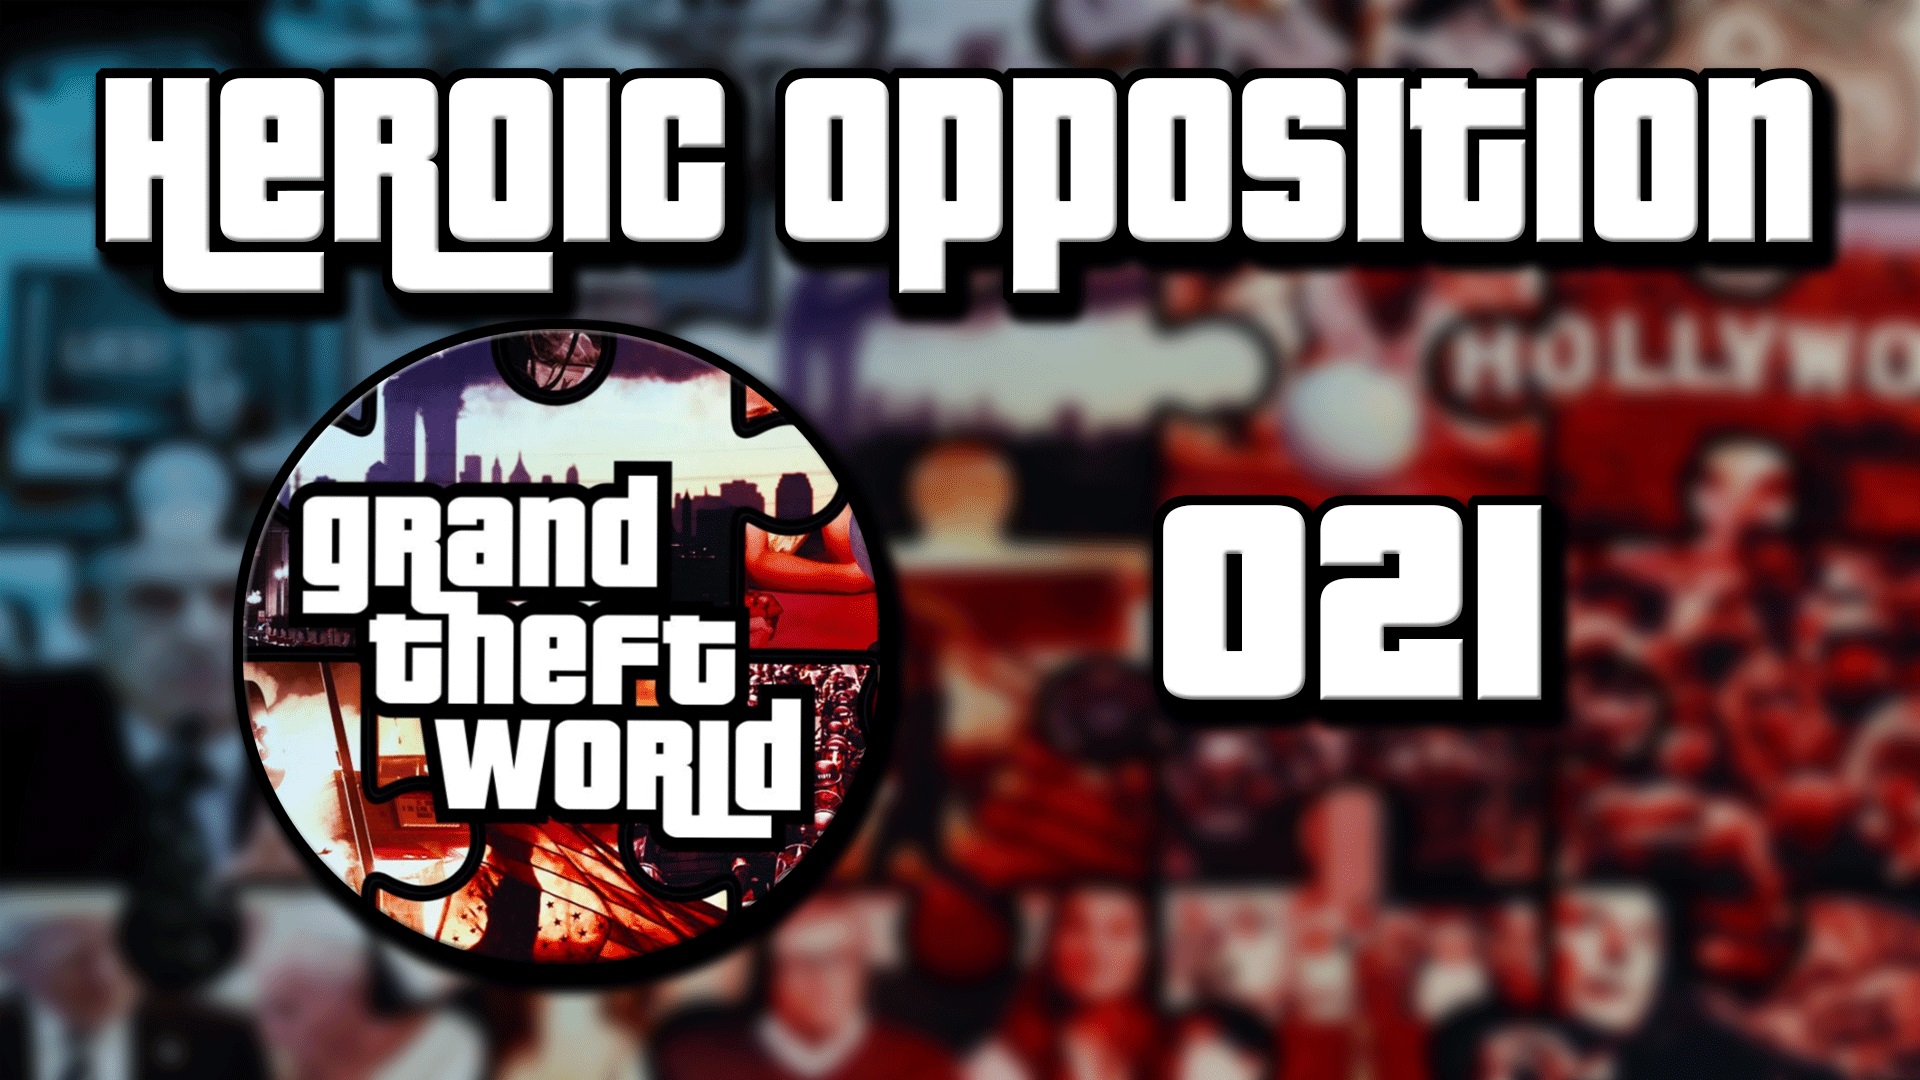 Grand Theft World Podcast 021 | Heroic Opposition